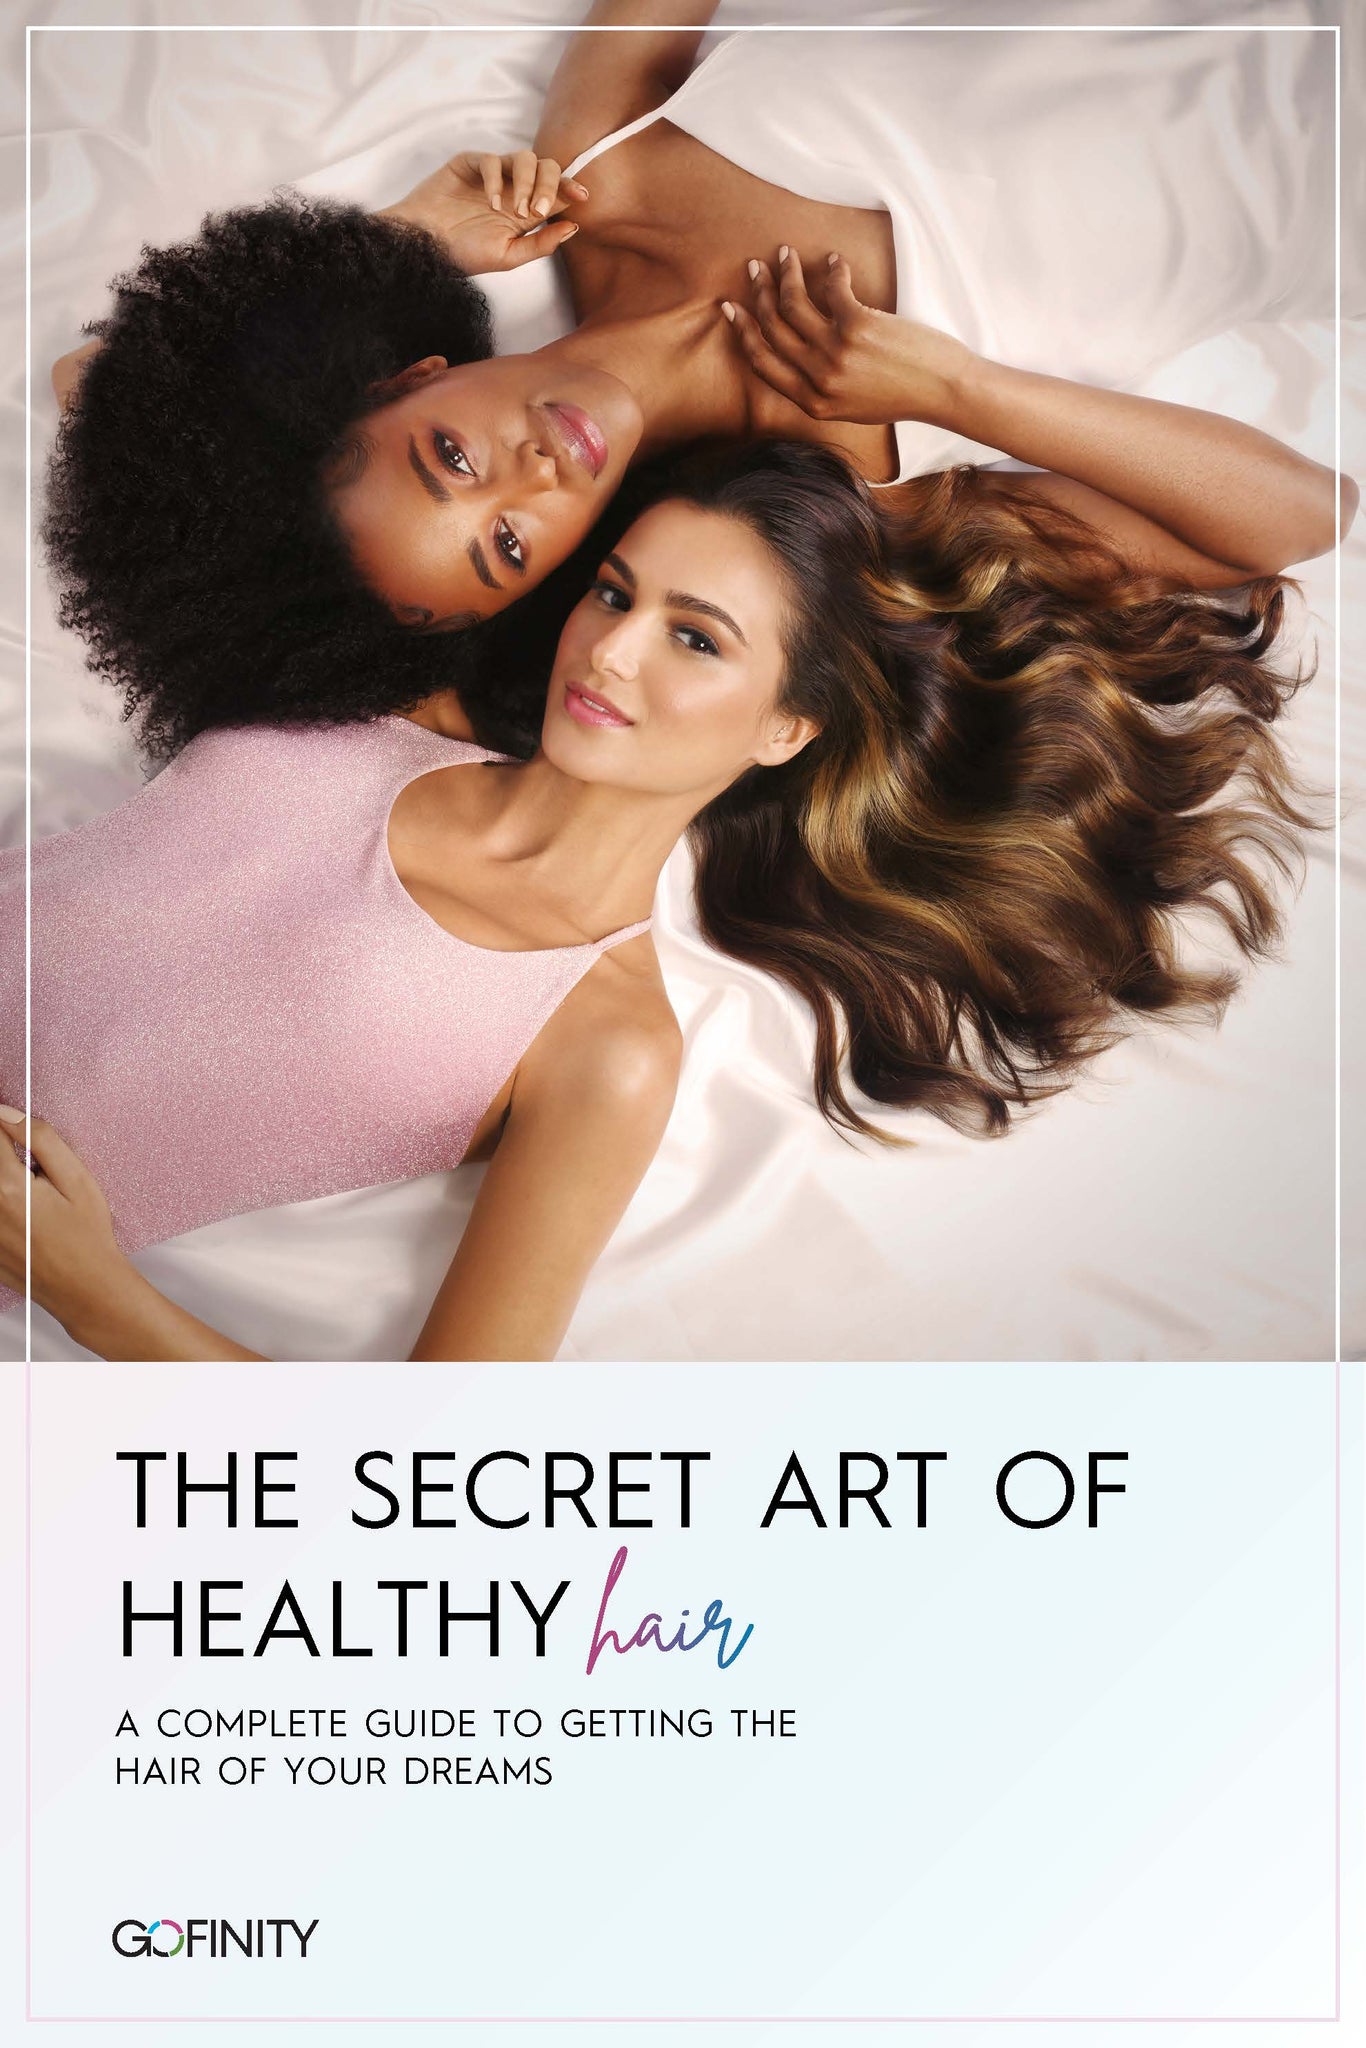 The Secret Art of Healthy Hair